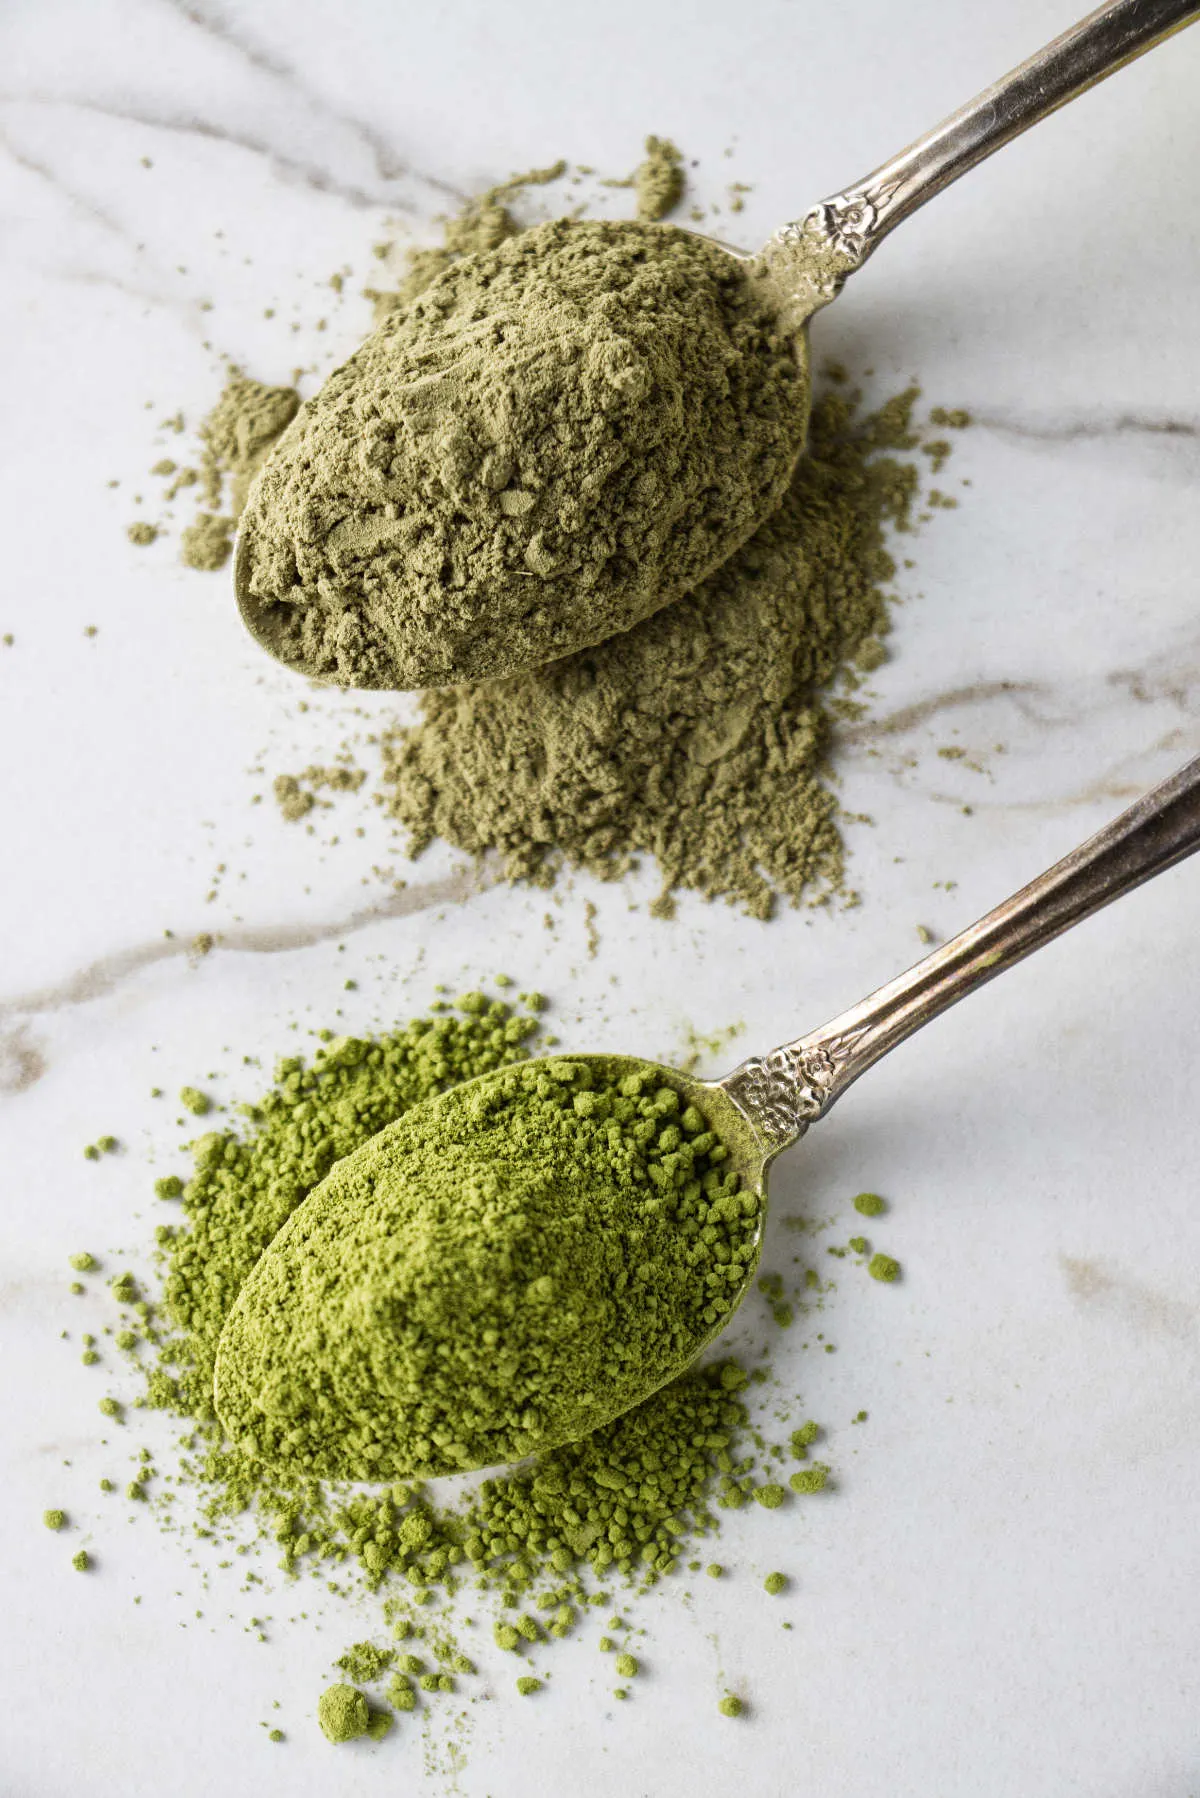 Muddy green matcha powder next to a vibrant green matcha powder.